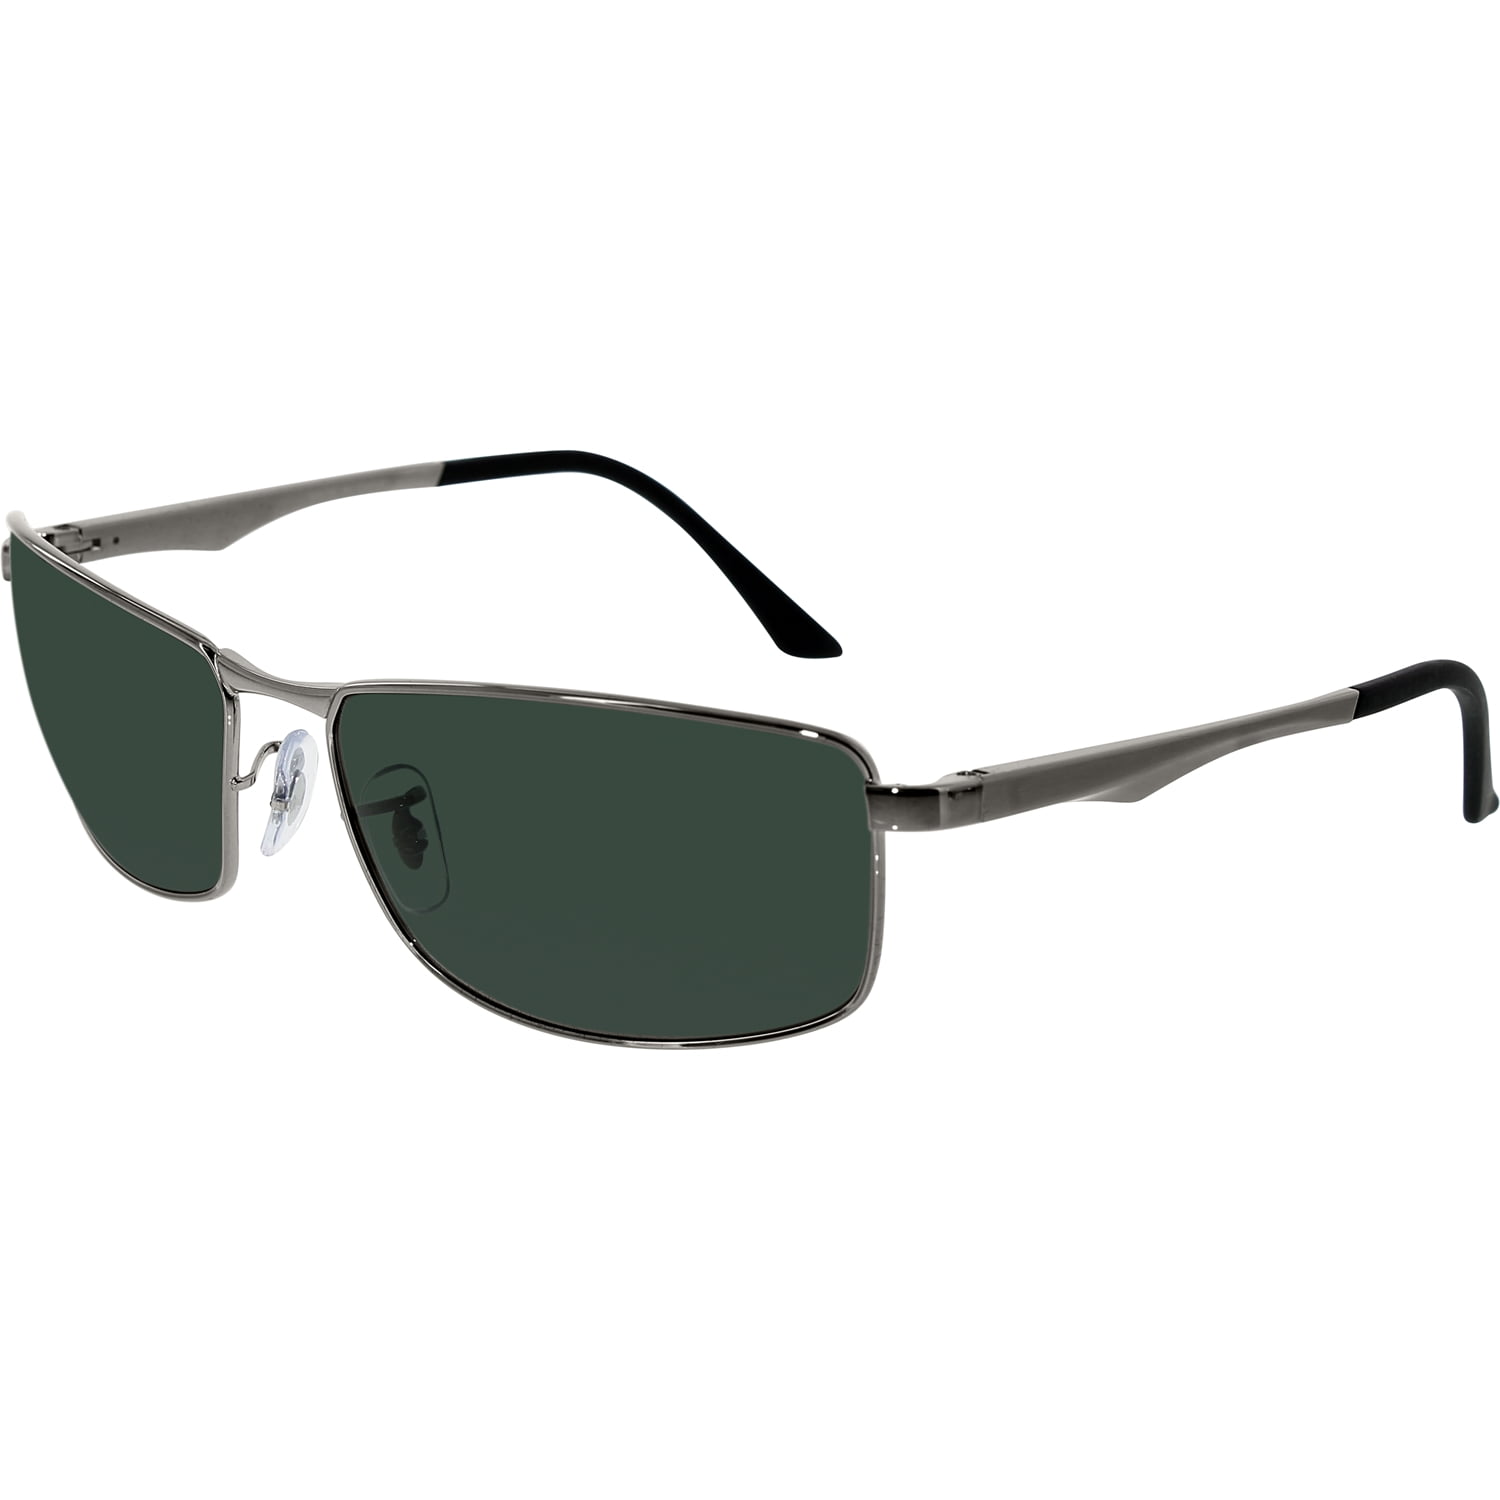 Ray-Ban Zonnebril Frame Alleen RB 3498 002/9A Zwart Rechthoekig Metaal 61 mm Accessoires Zonnebrillen & Eyewear Brillen 